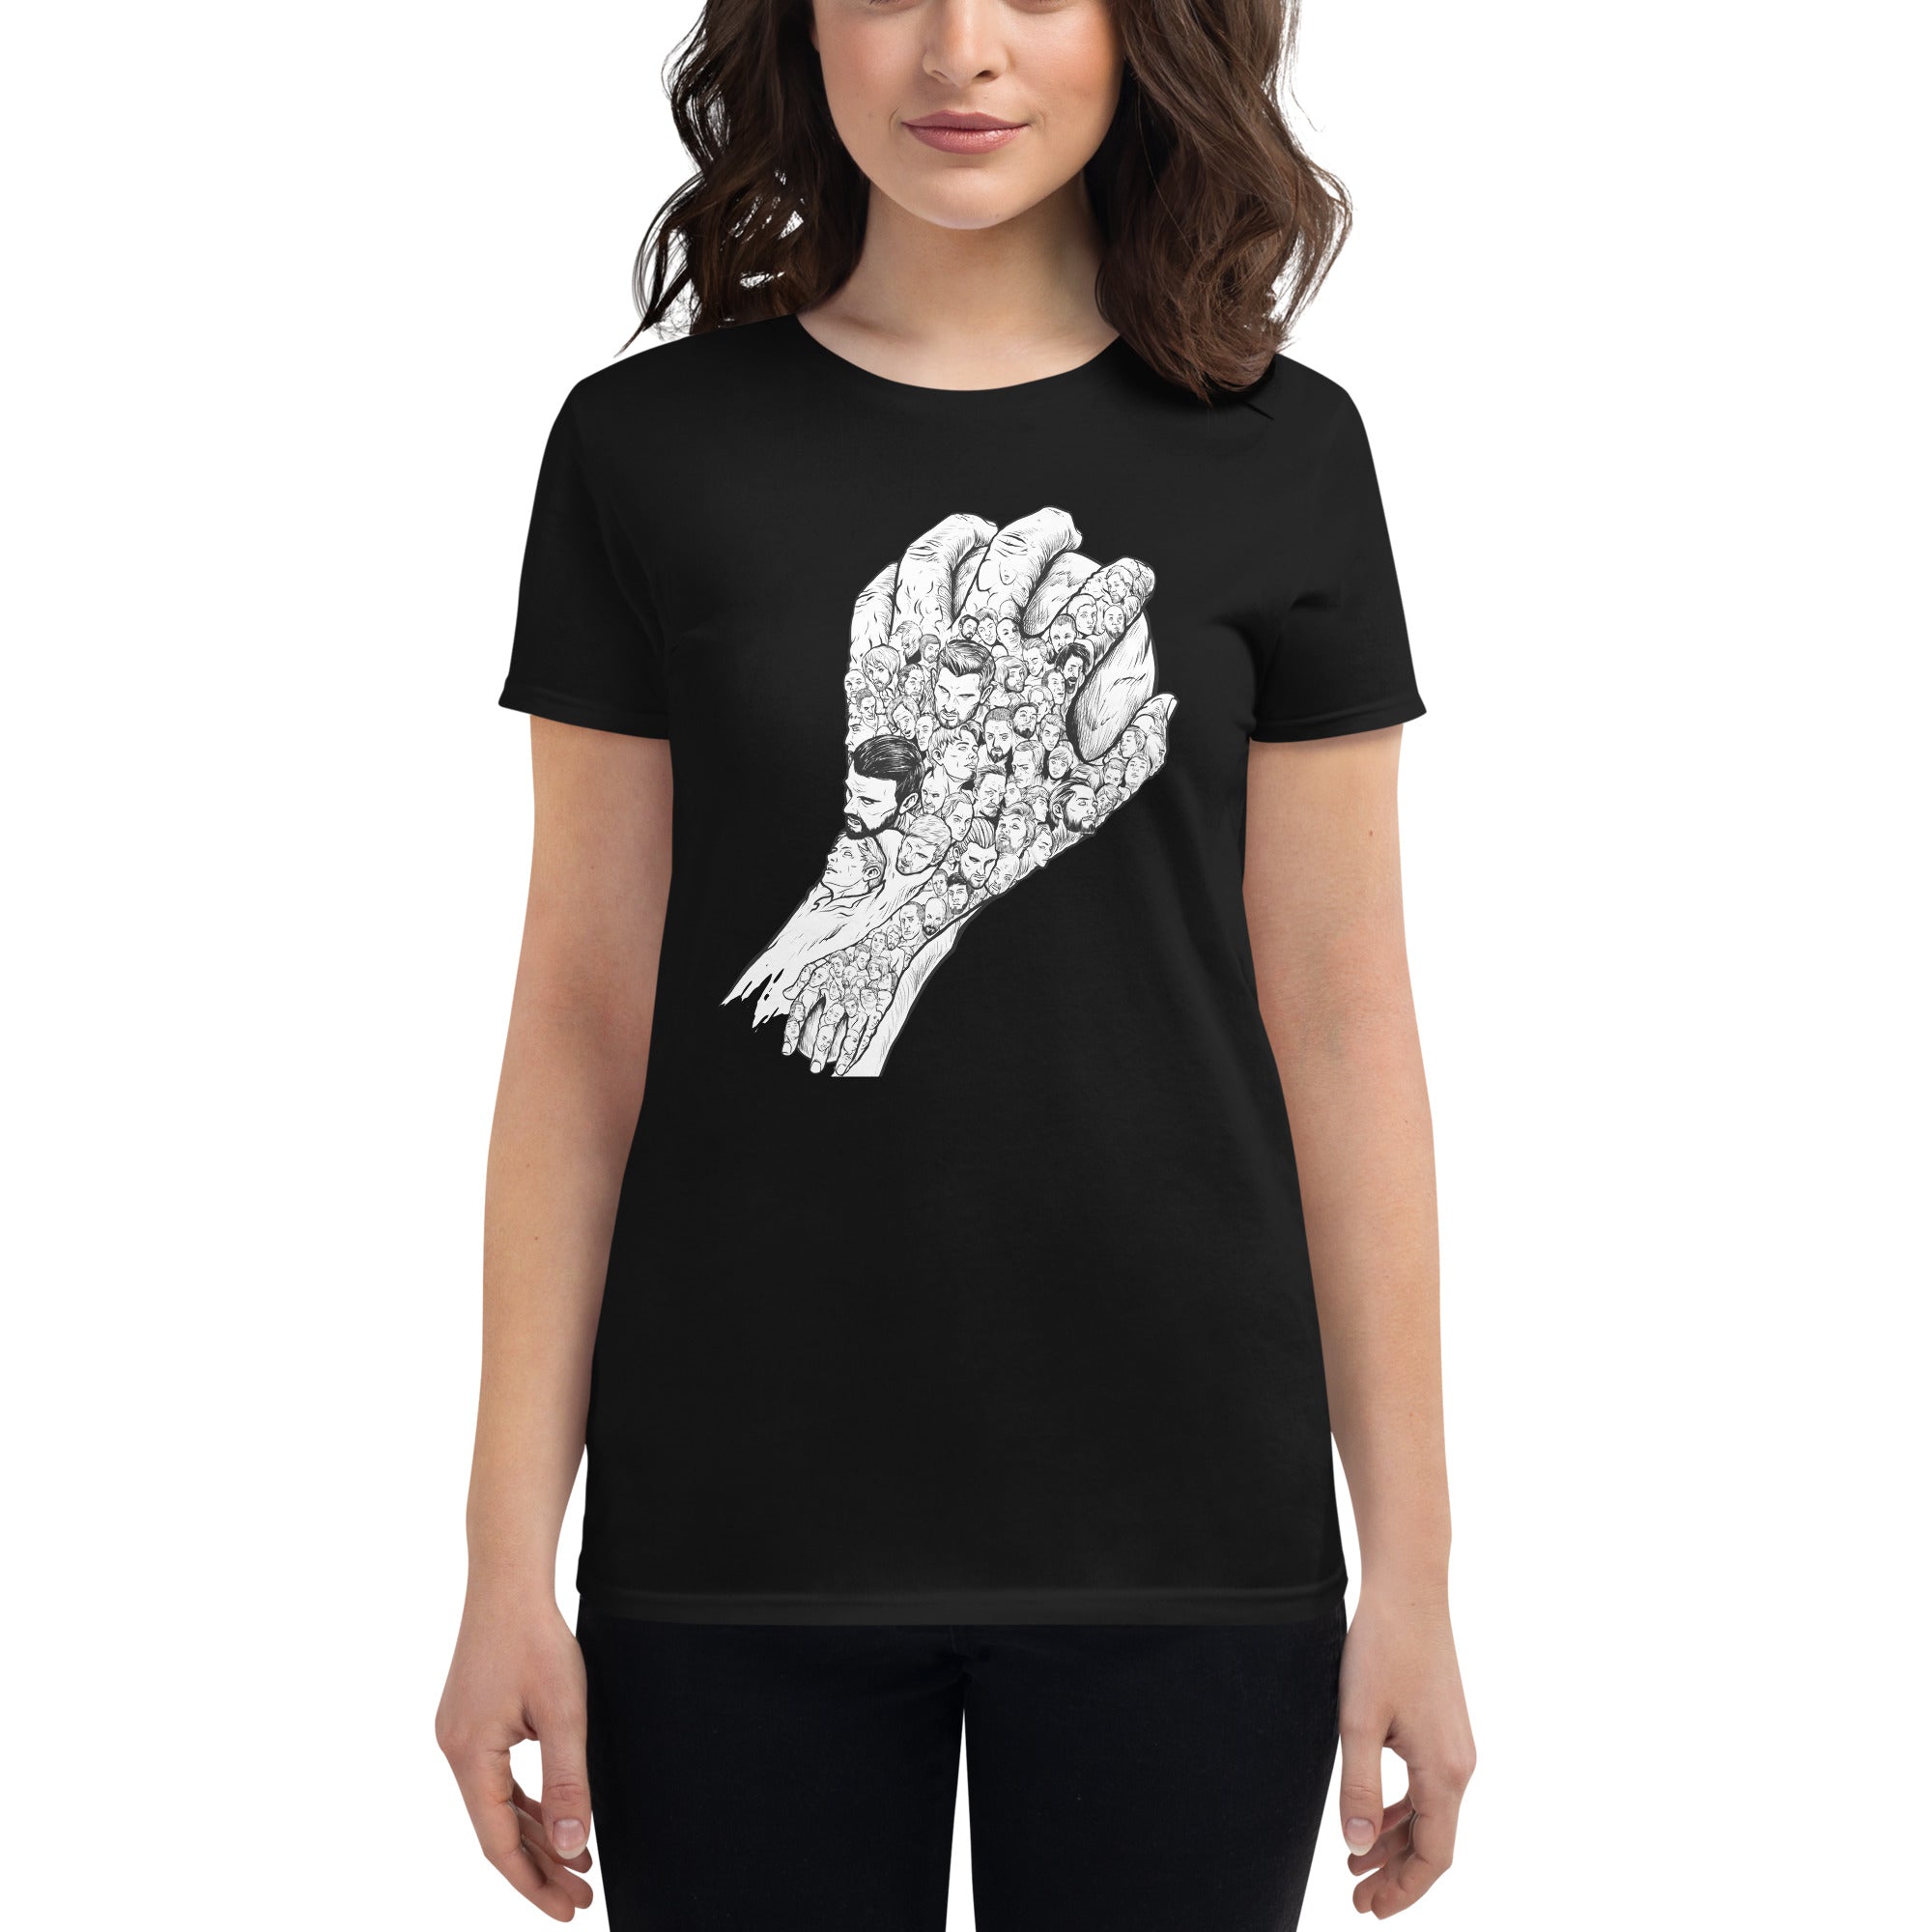 Hand and Face Women's short sleeve t-shirt